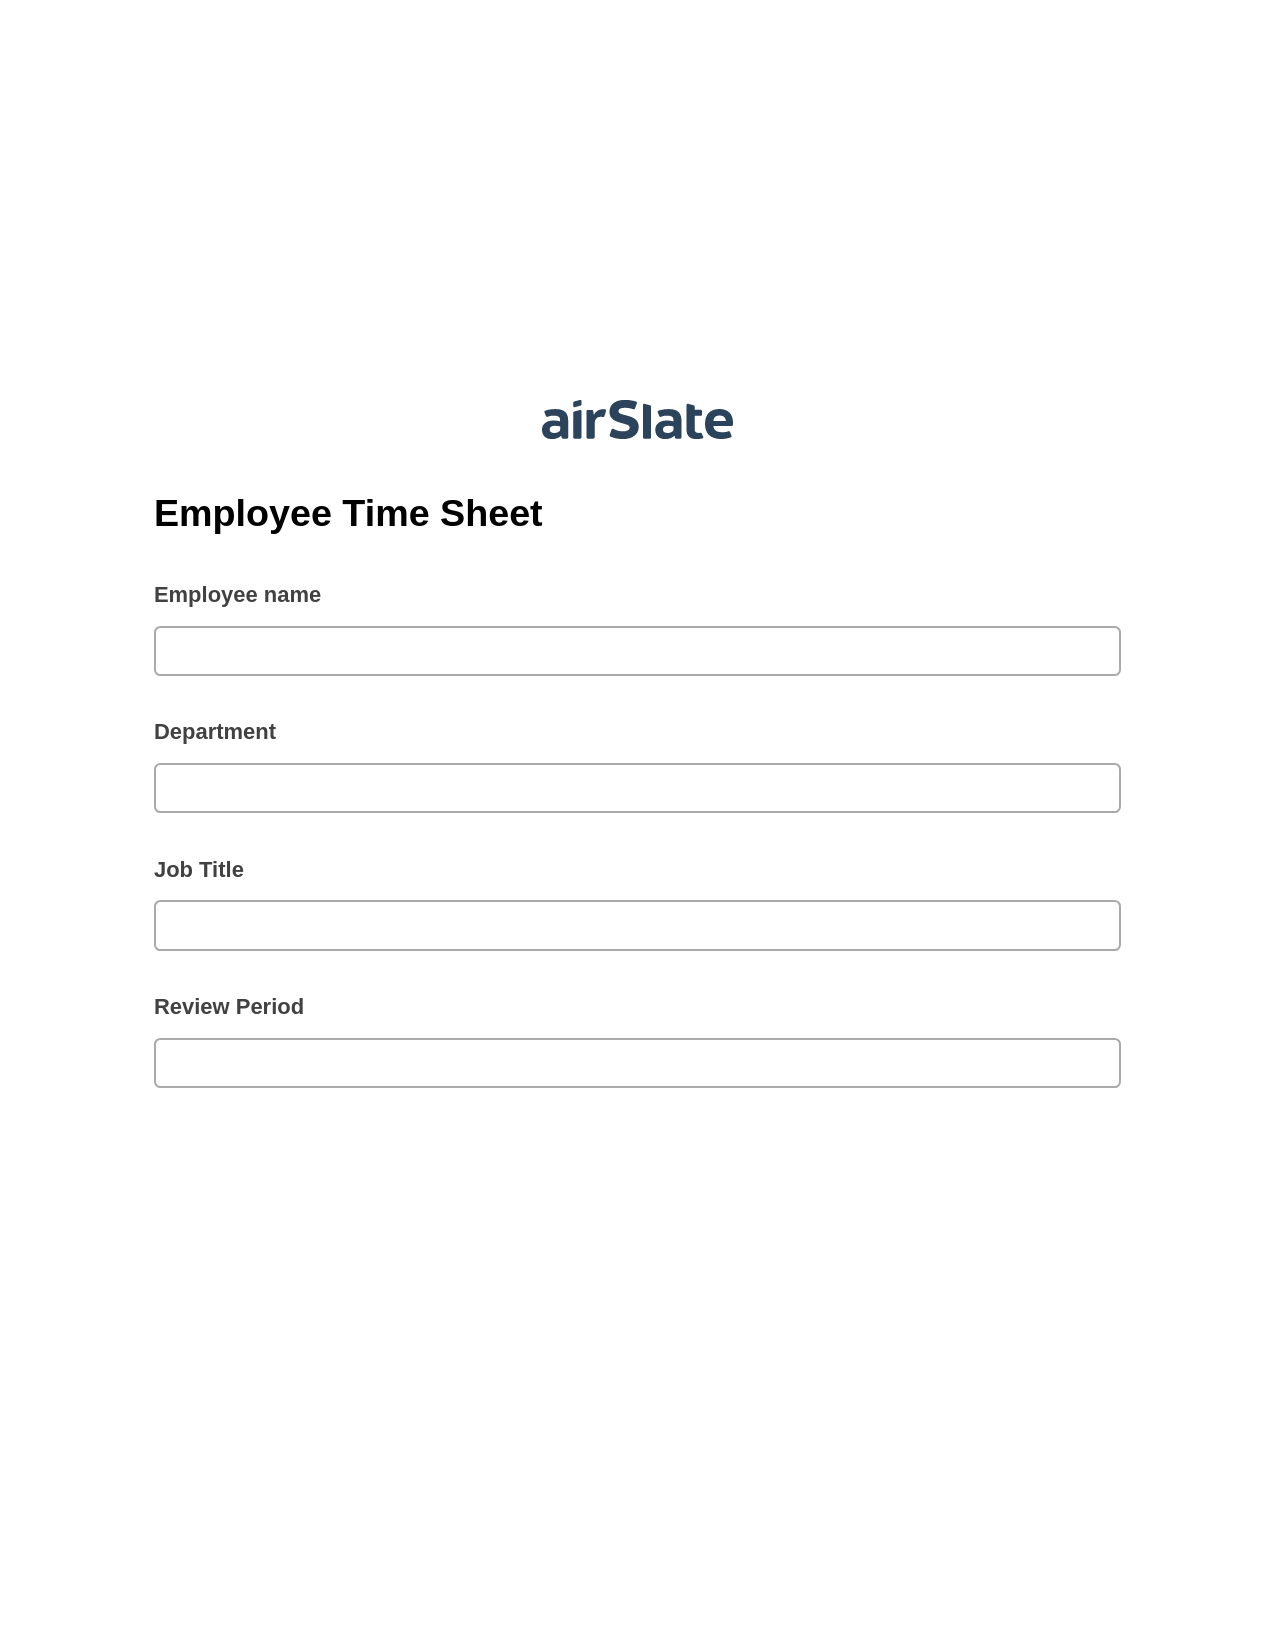 Multirole Employee Time Sheet Pre-fill from Smartsheet Bot, Create slate addon, Archive to Dropbox Bot